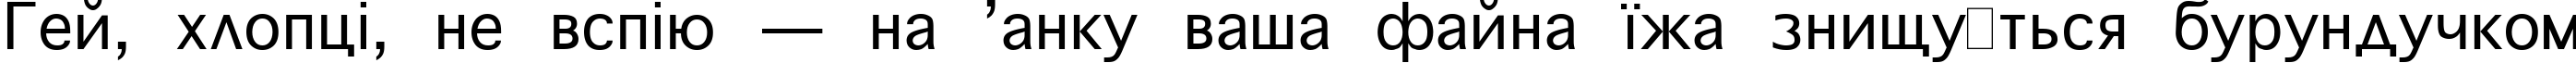 Пример написания шрифтом Geneva Plain:001.001 текста на украинском